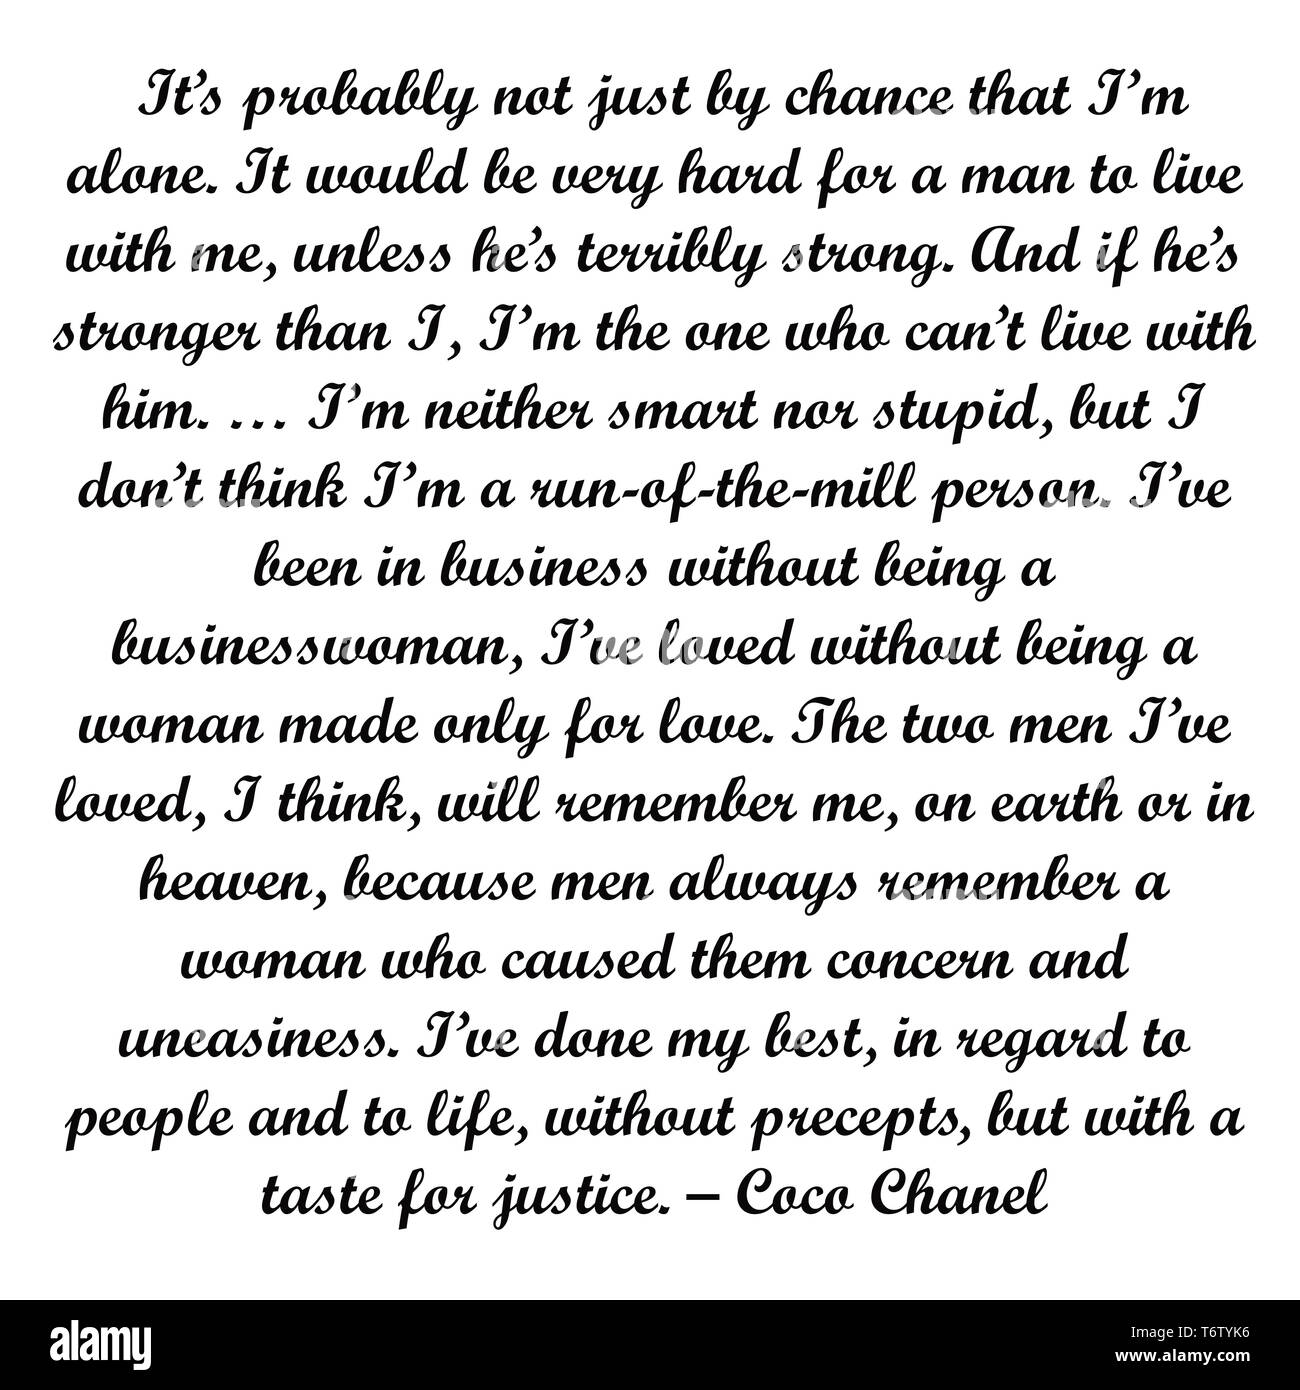 Money wisdom from Coco Chanel